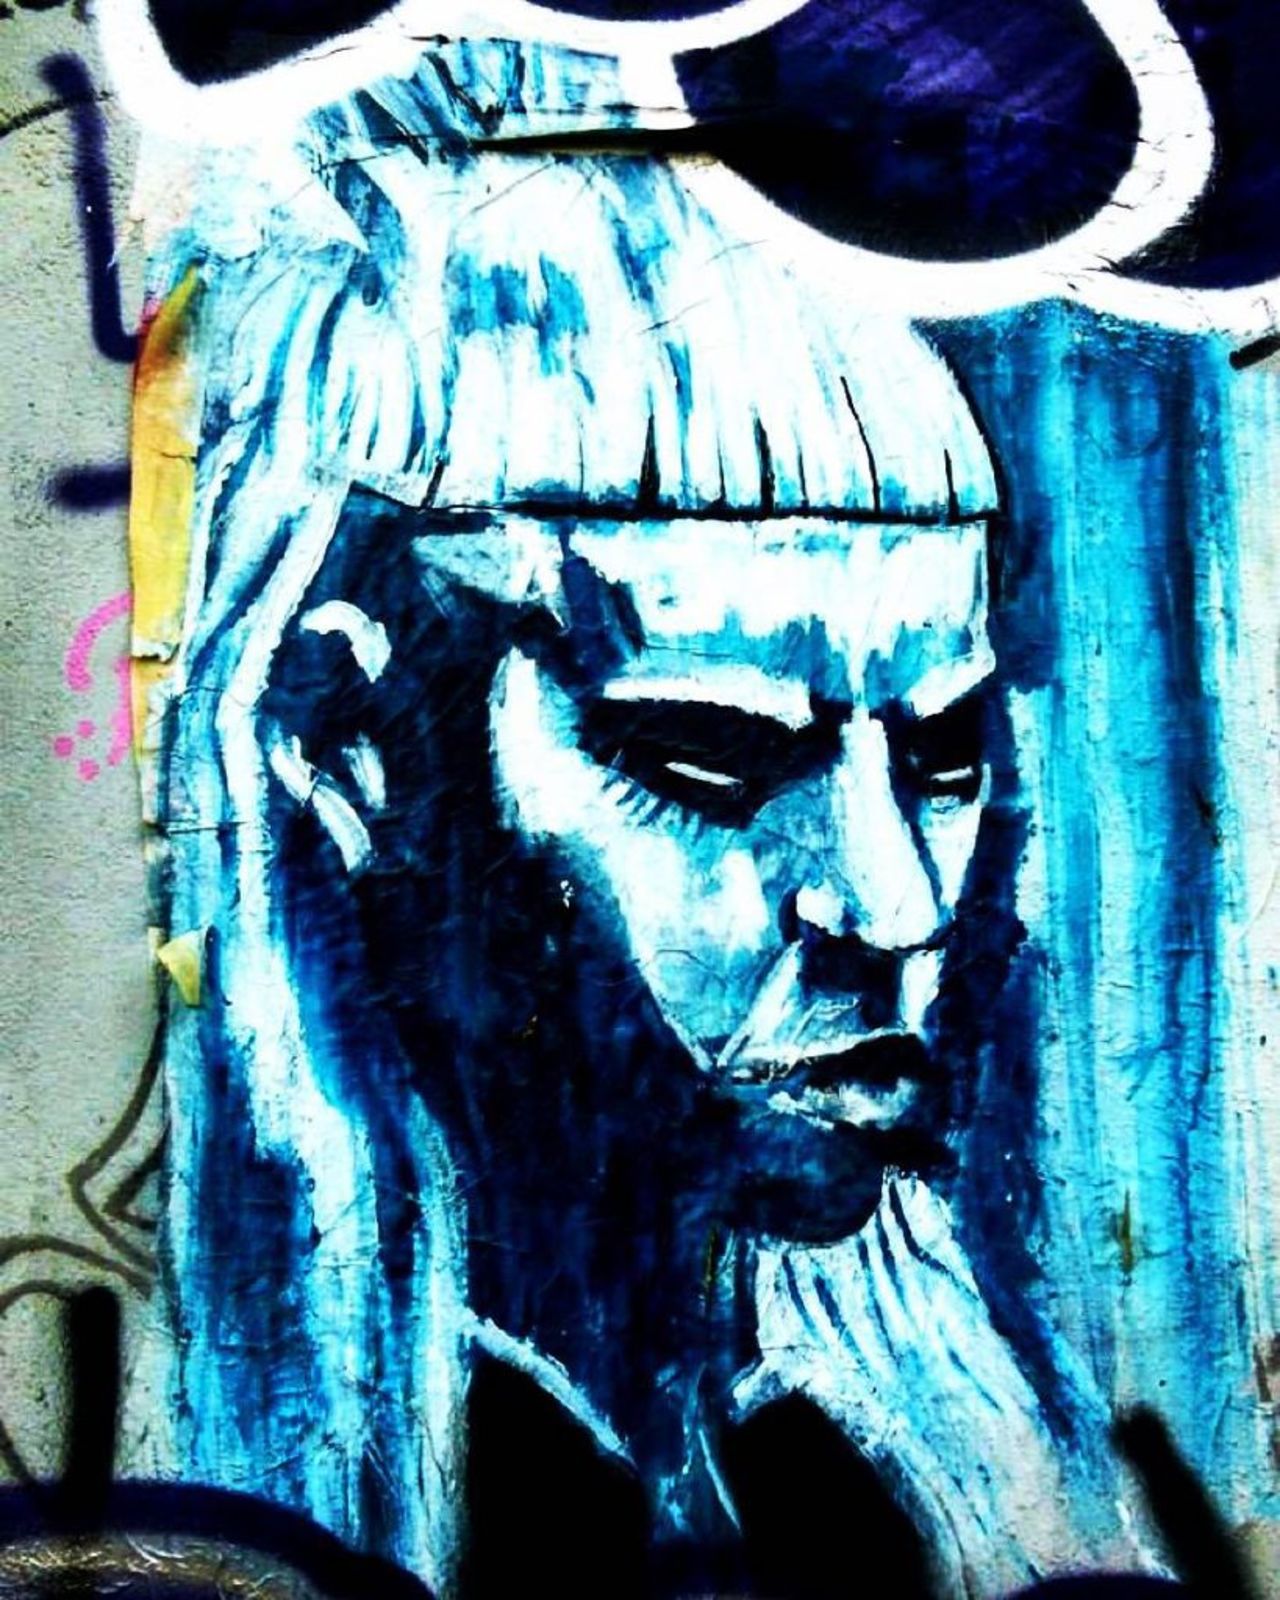 StArtEverywhere: #kristx #paris #streetartparis #streetart #street #urban #wall #art #graffiti  #artwork #mural #s… https://t.co/qF2CeqD8JT